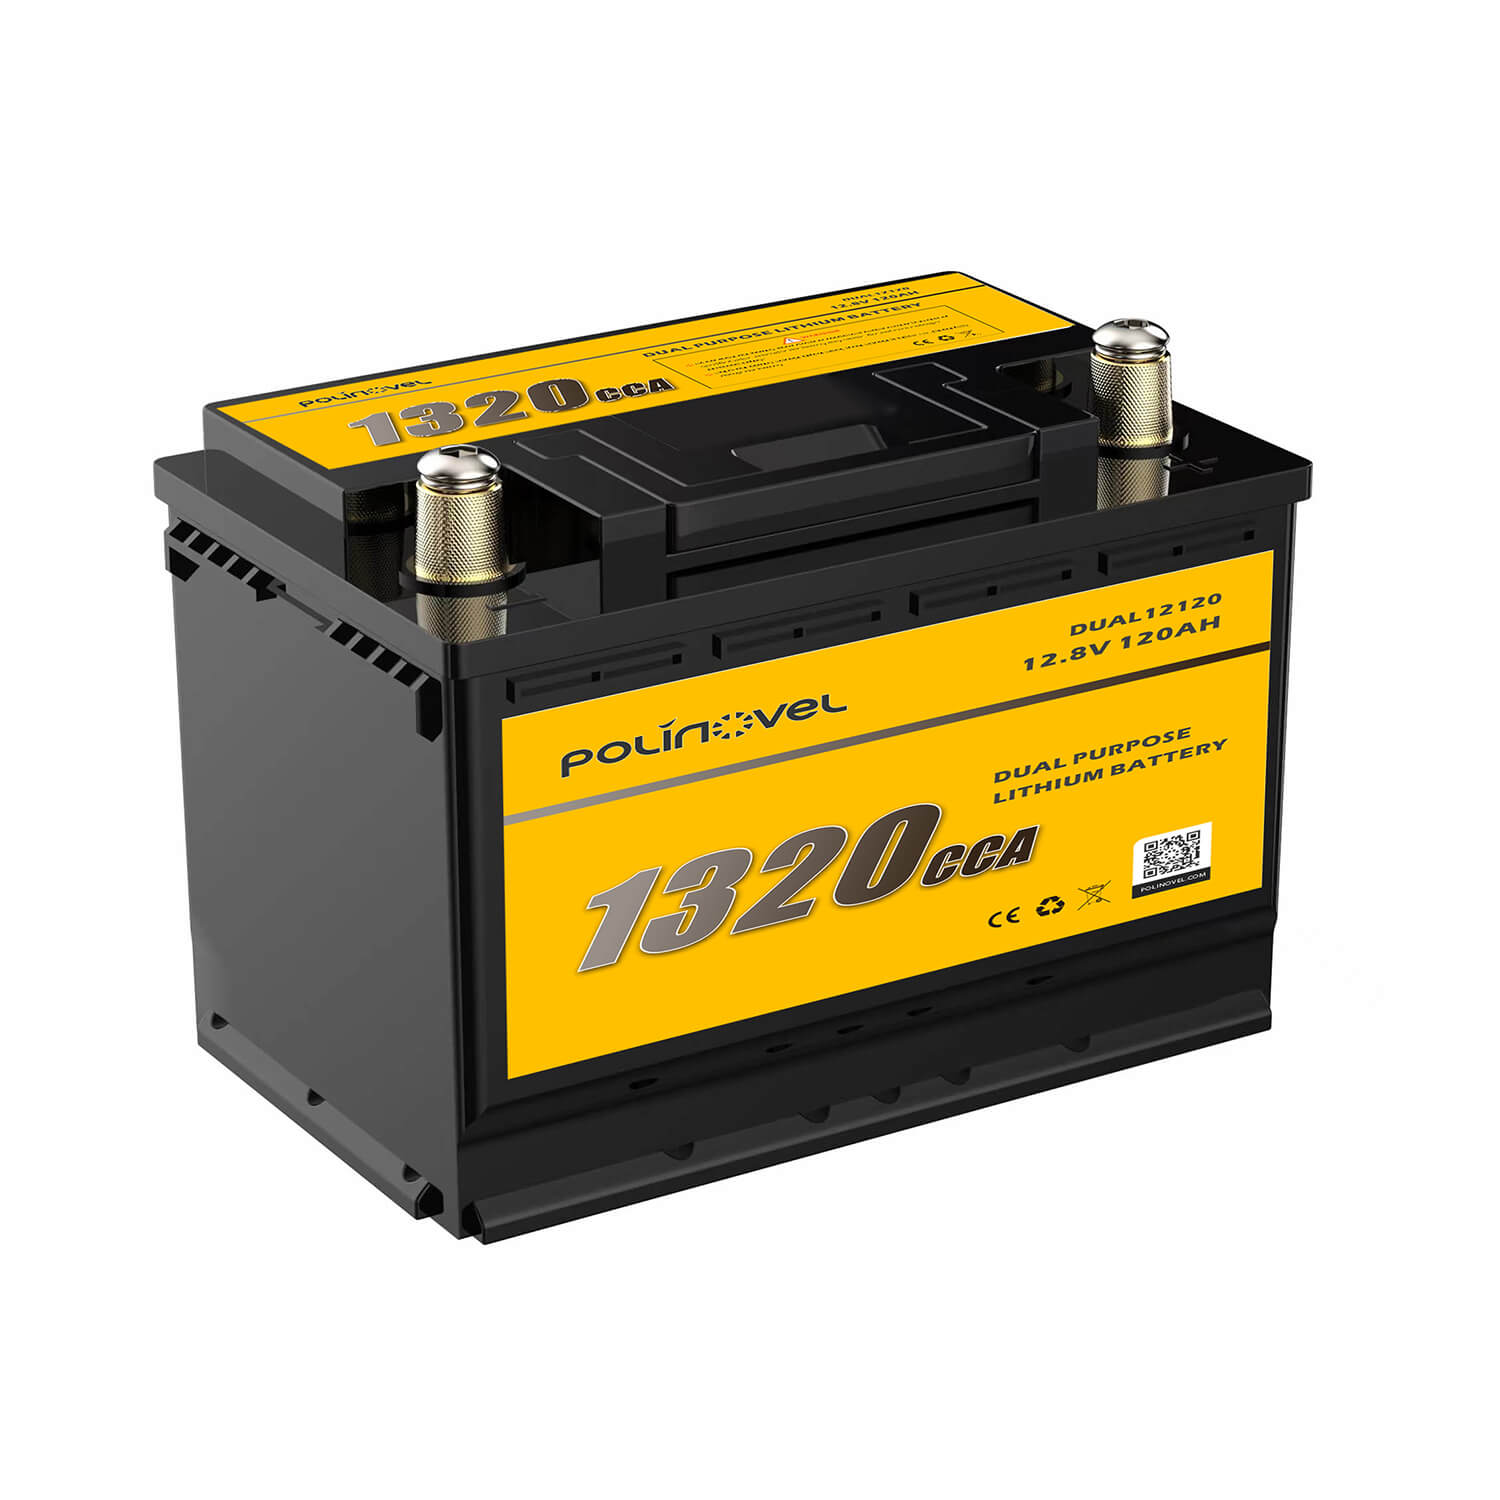 DUAL12120 dual purpose lithium battery